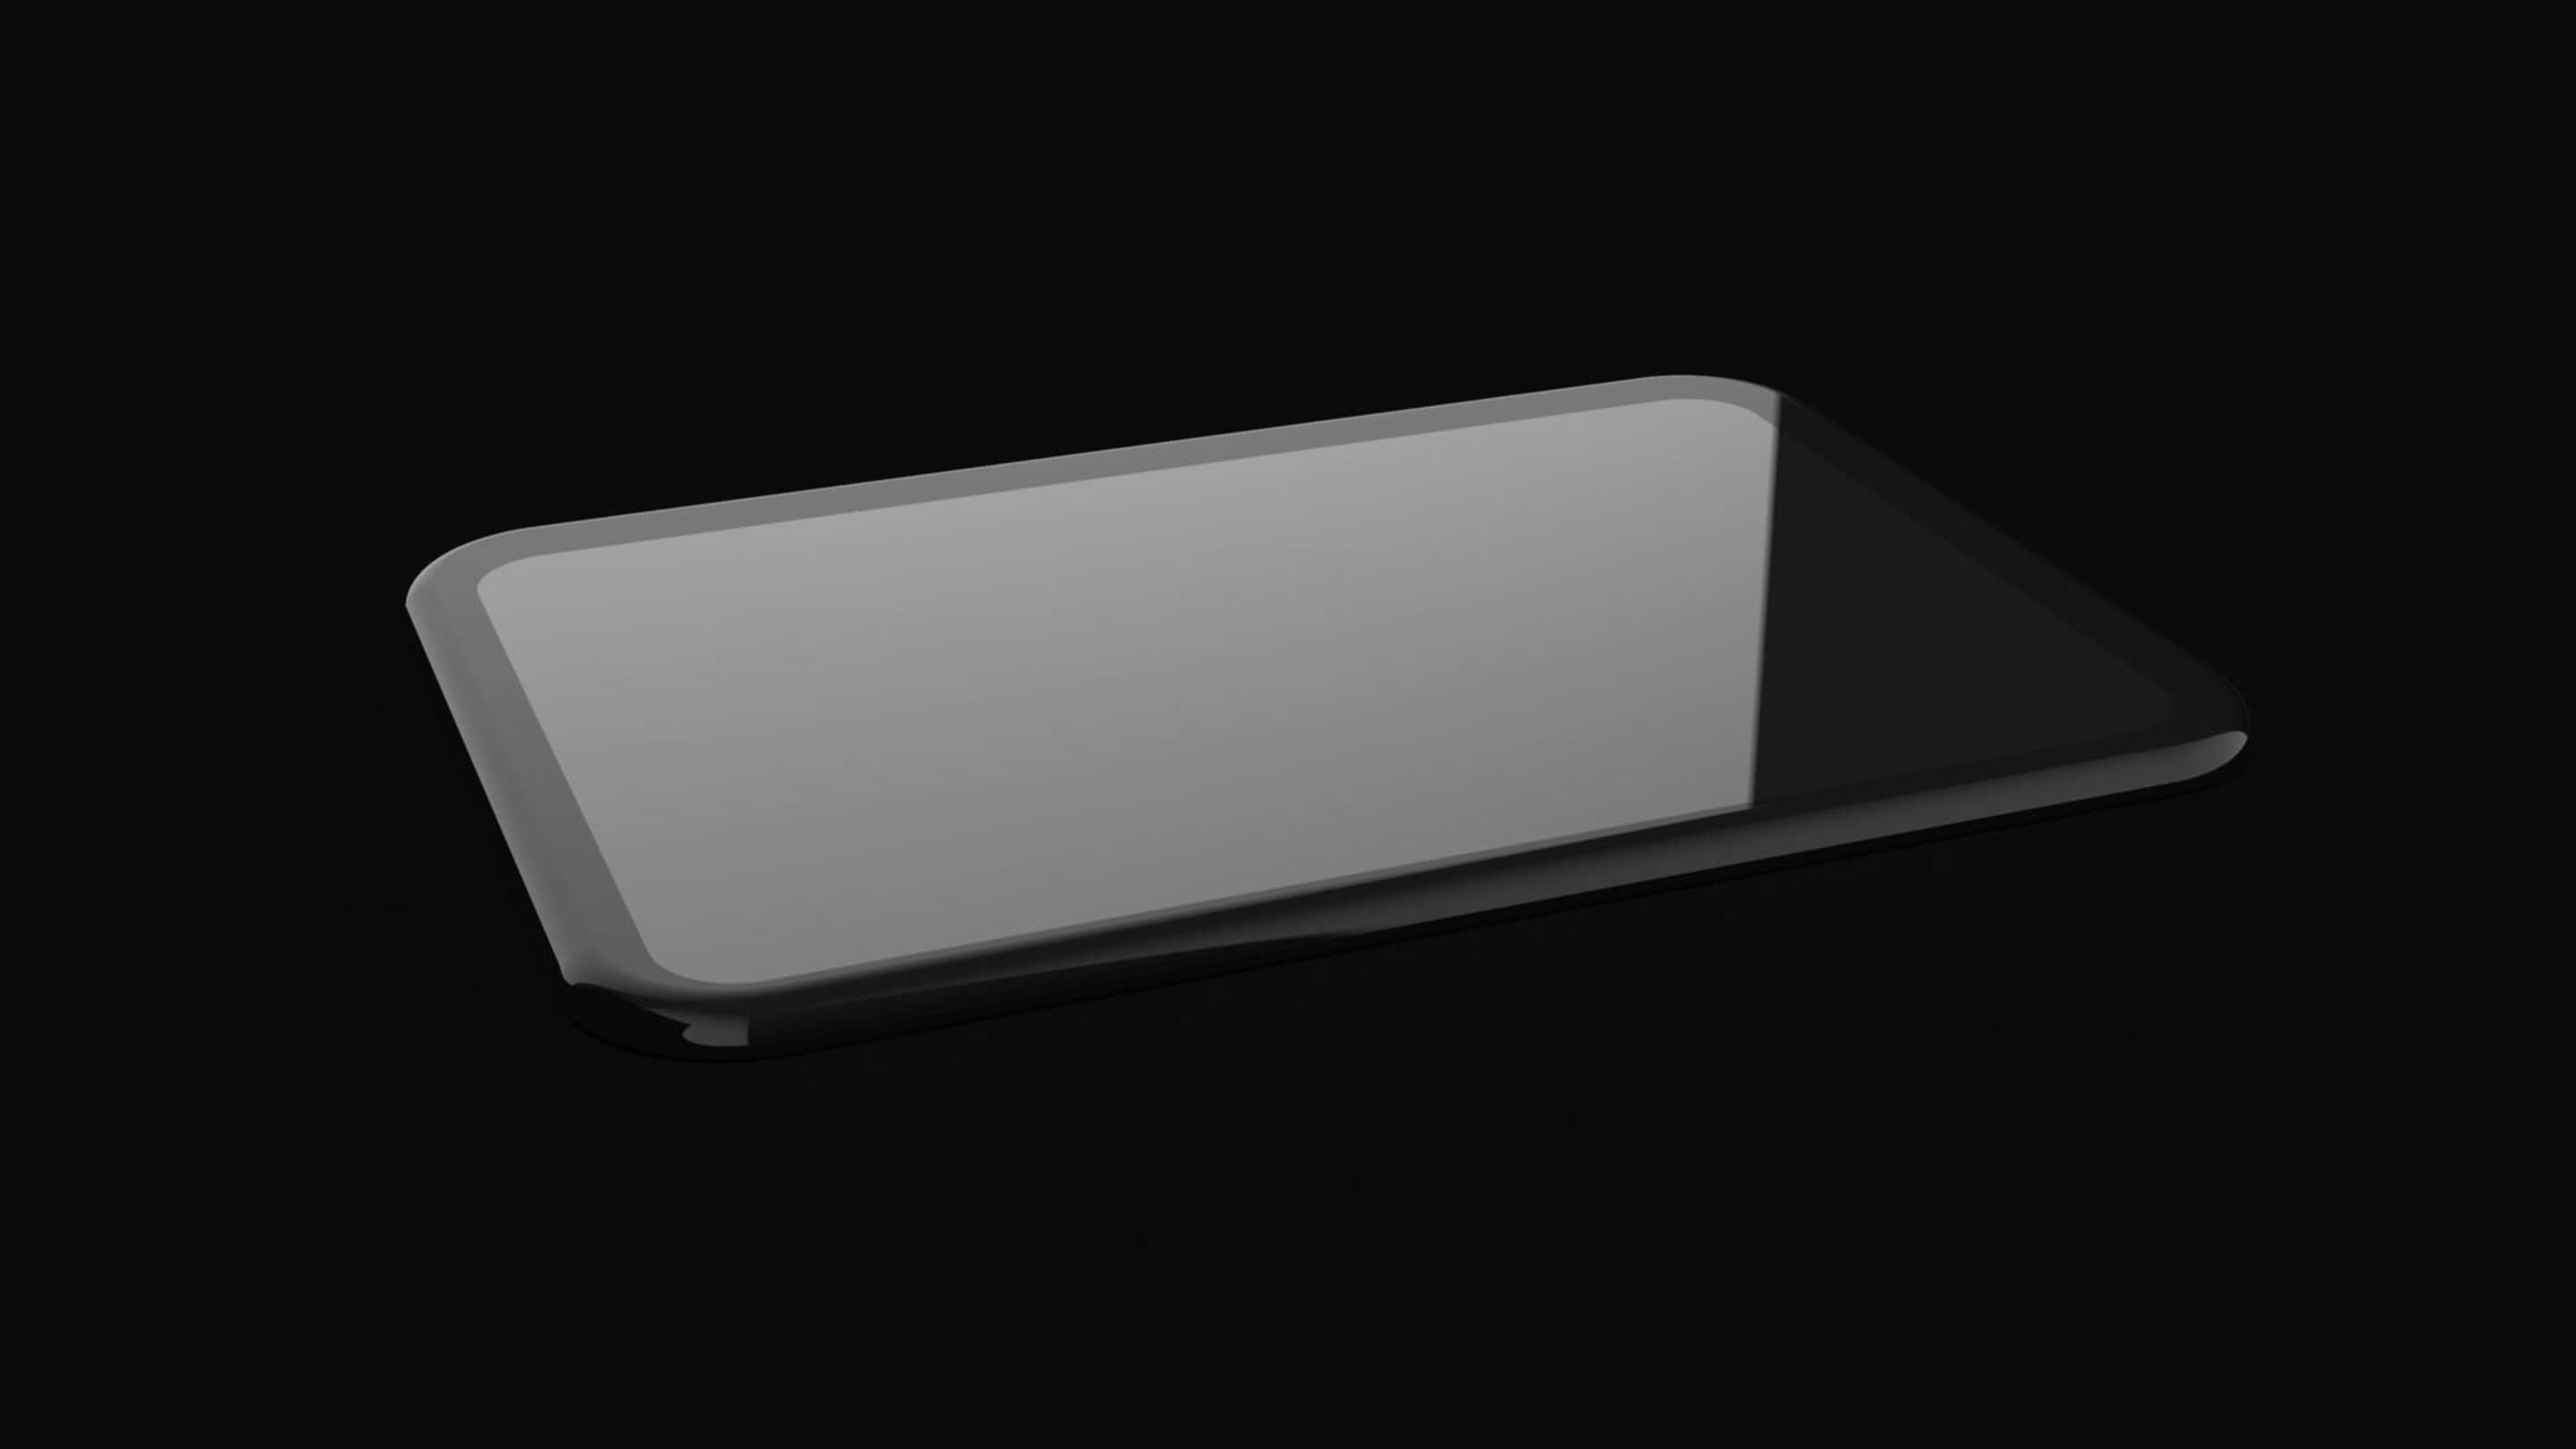 Impactinator® ガラス - ガラス ラウンド エッジ 回転 黒: 黒い背景を持つ黒い長方形のオブジェクト